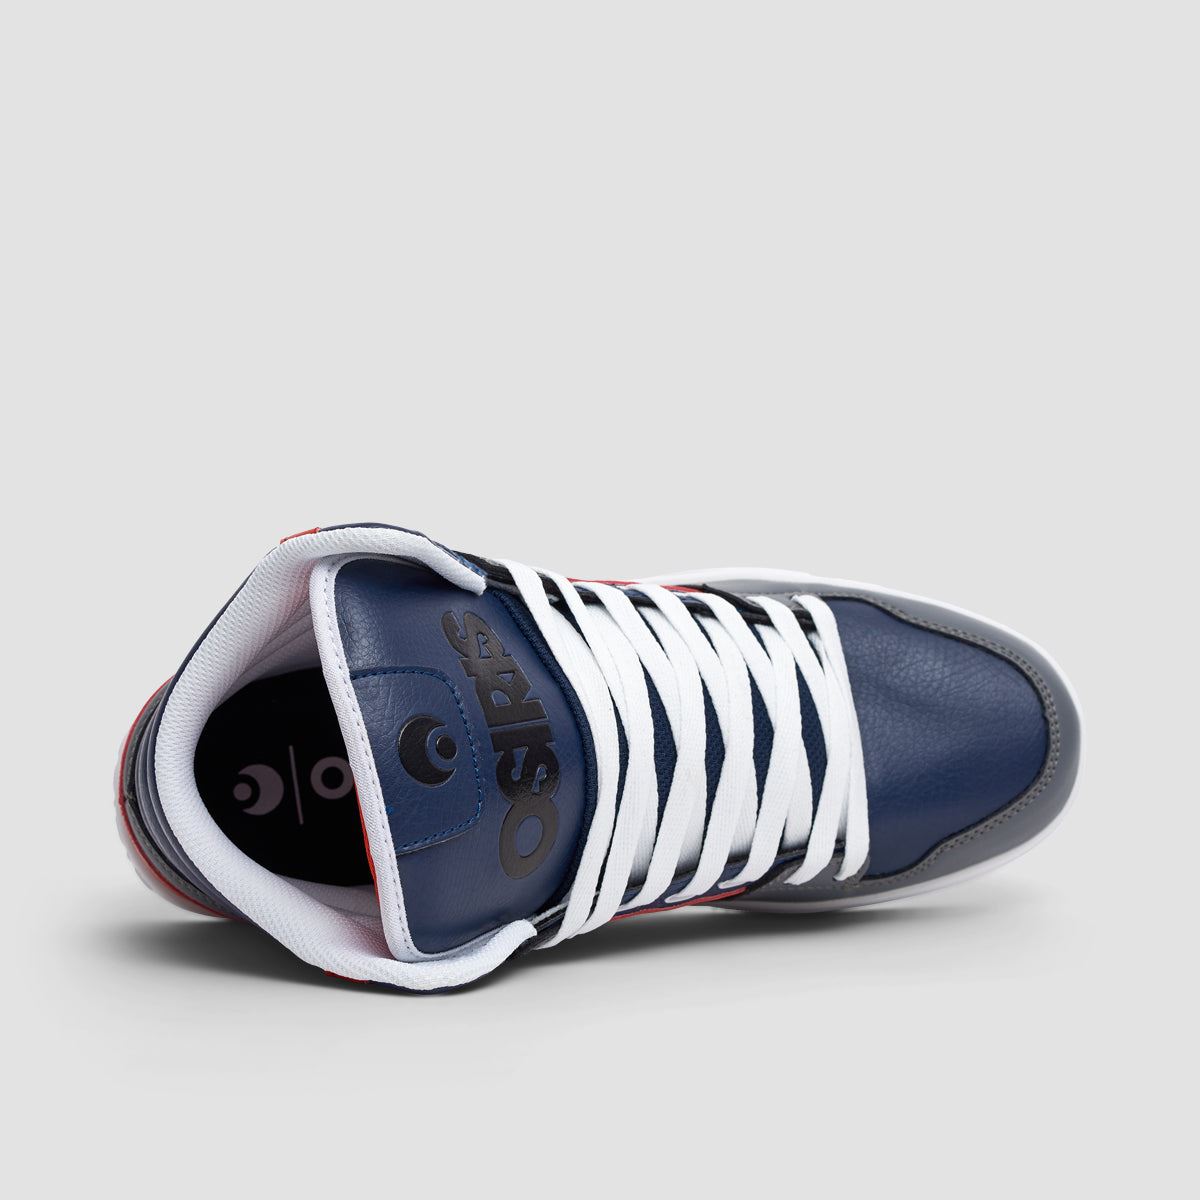 Osiris Clone Shoes - Navy/Red/Grey